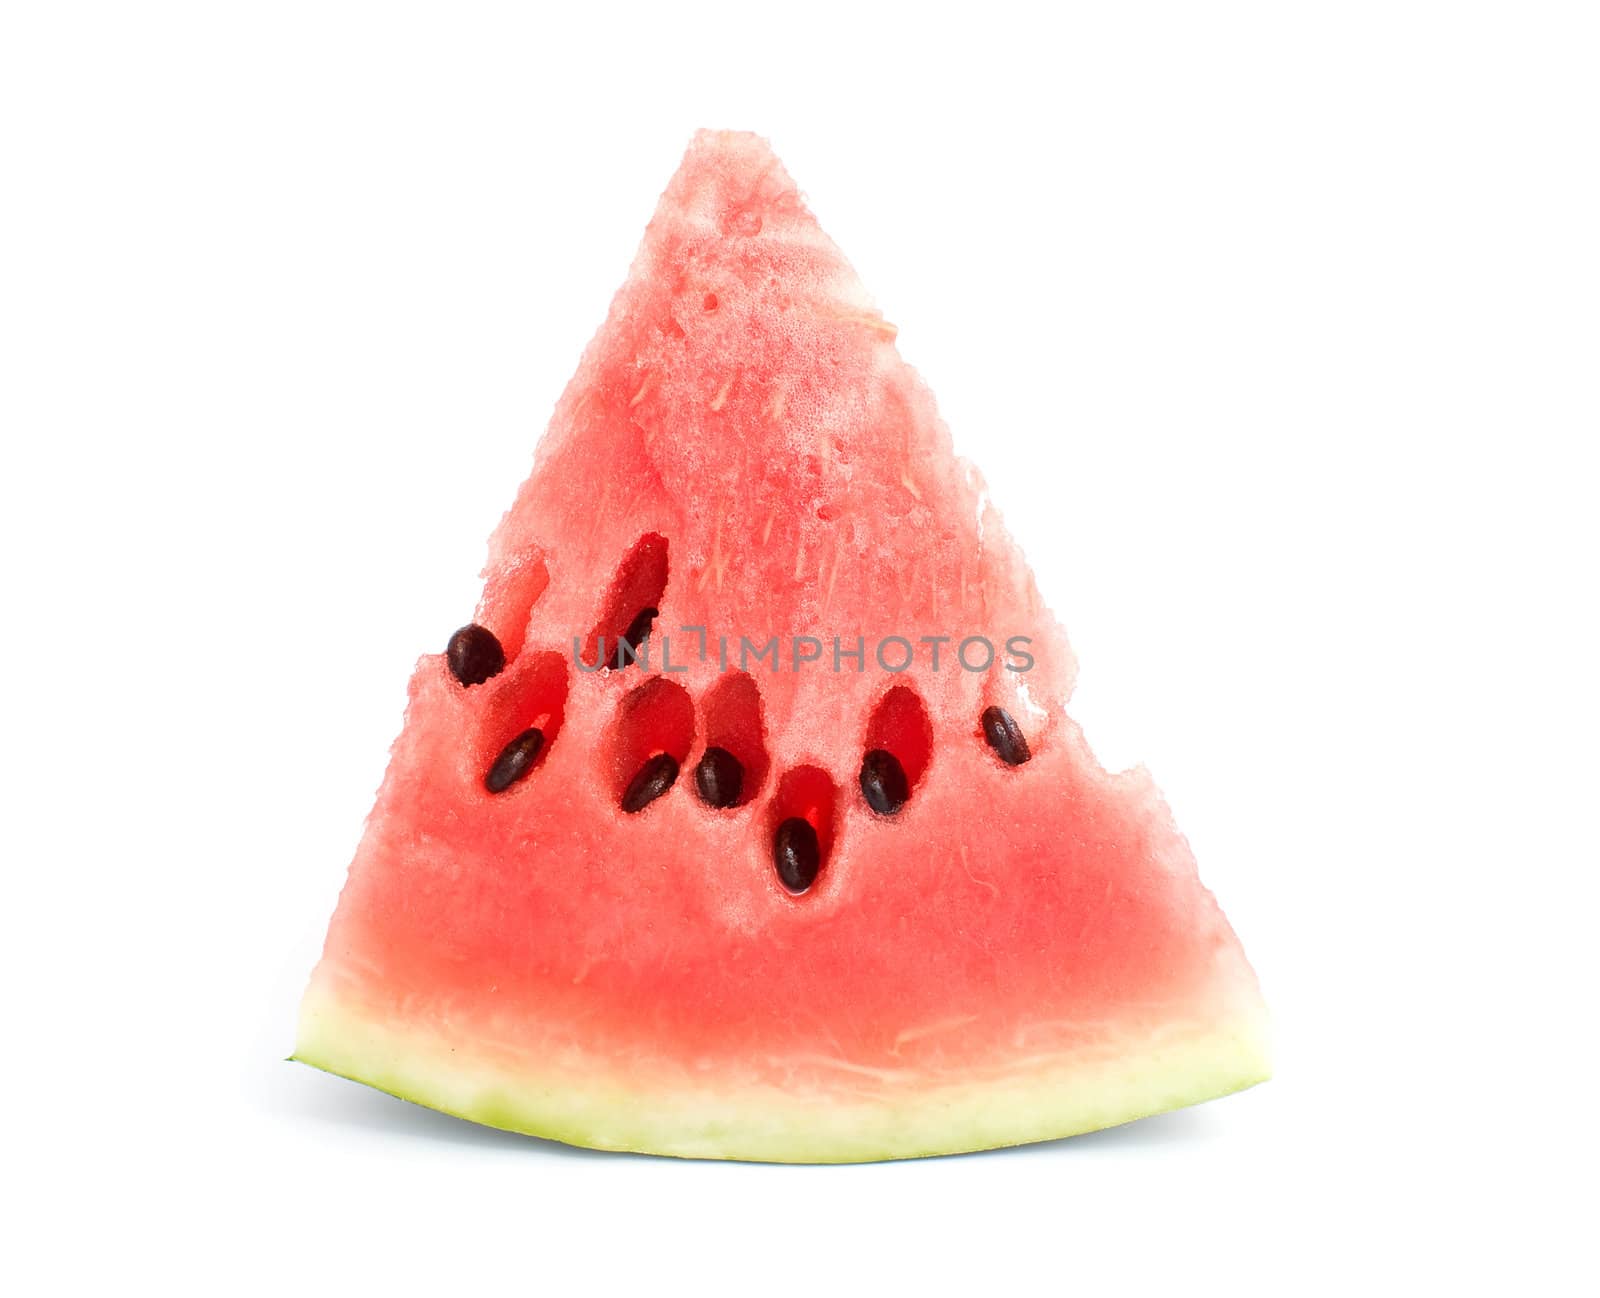 watermelon by Bedolaga